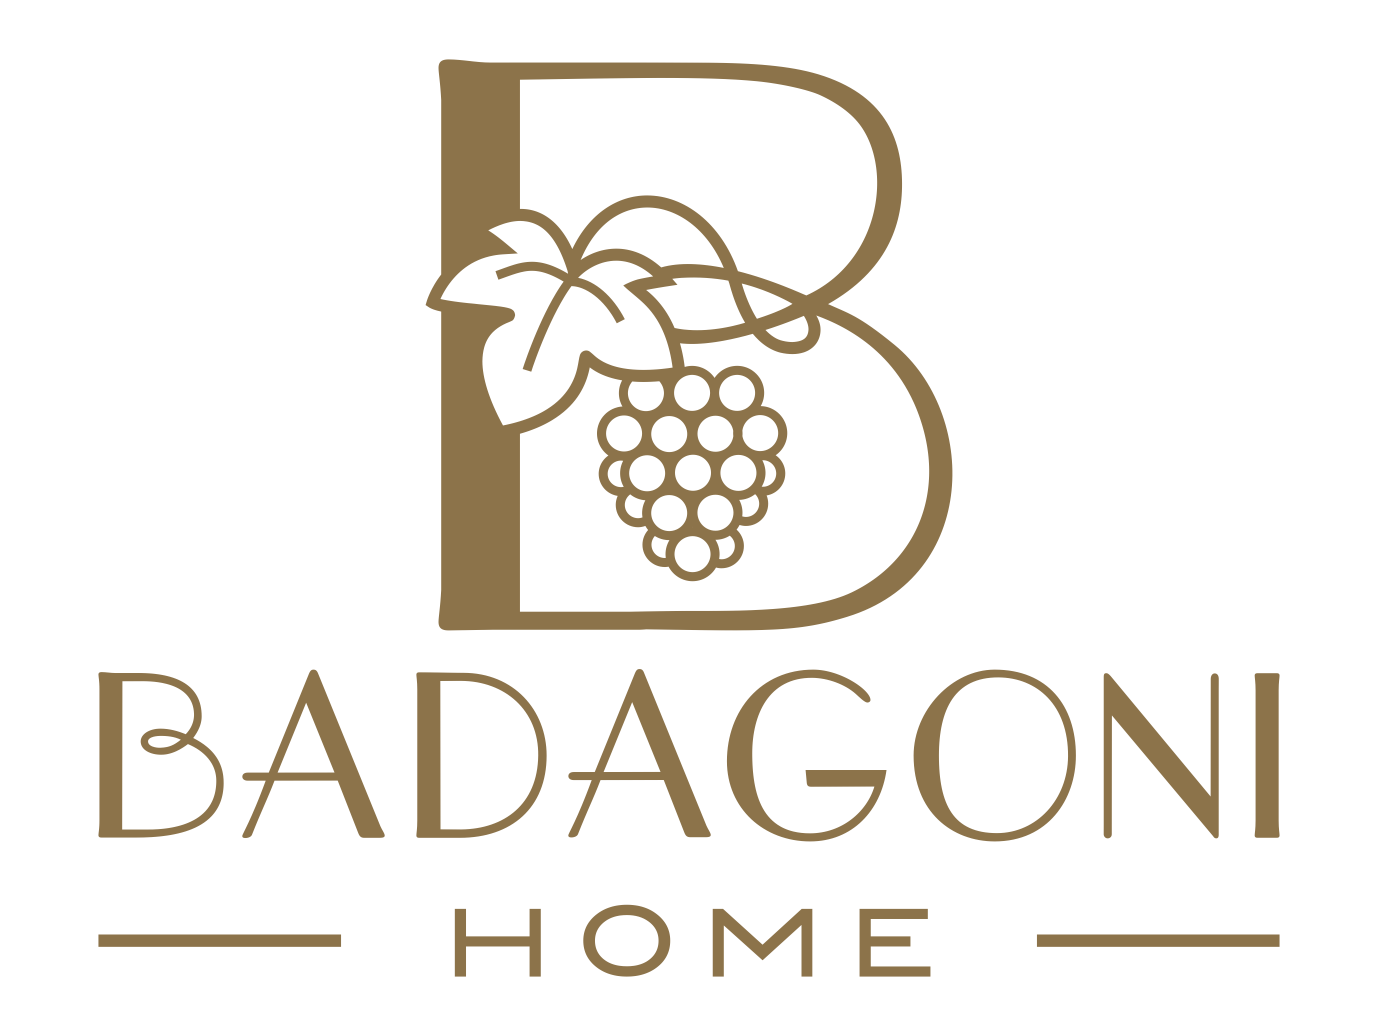 Badagoni Home